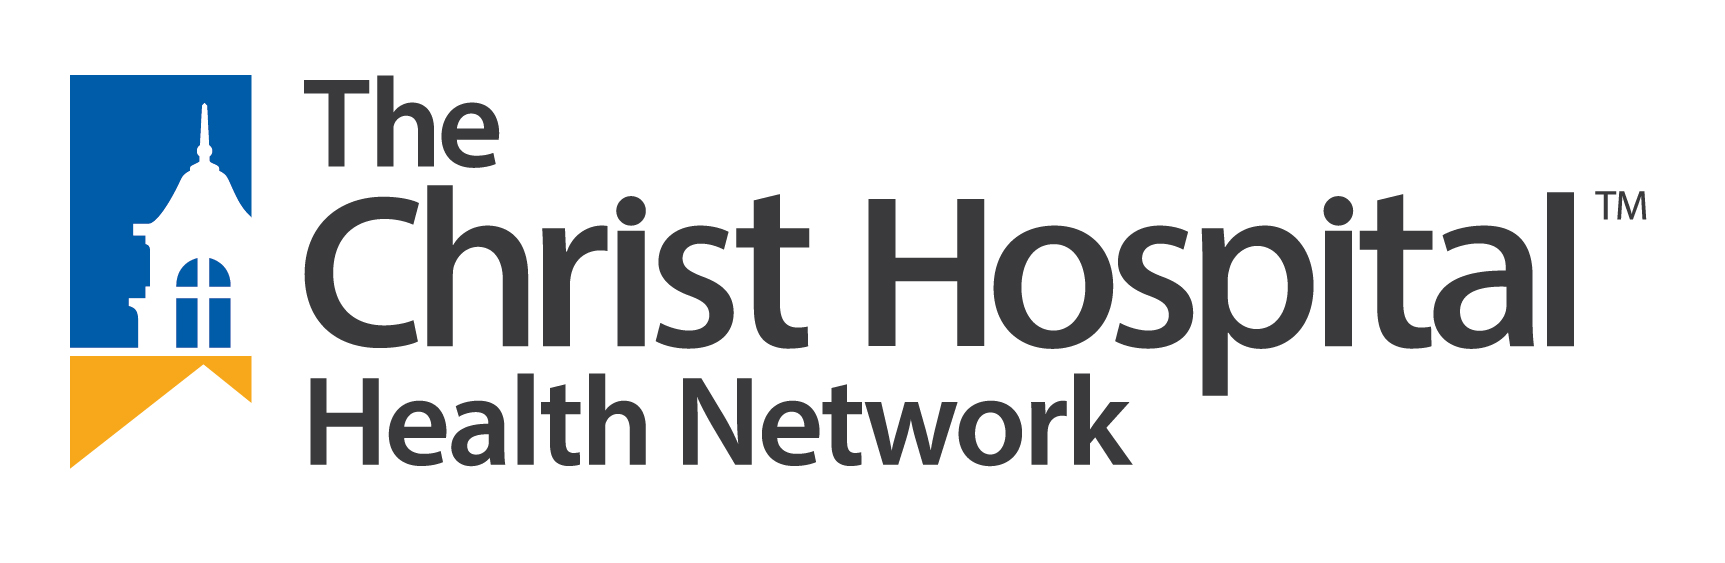 The Christ Hospital Health Network Logo